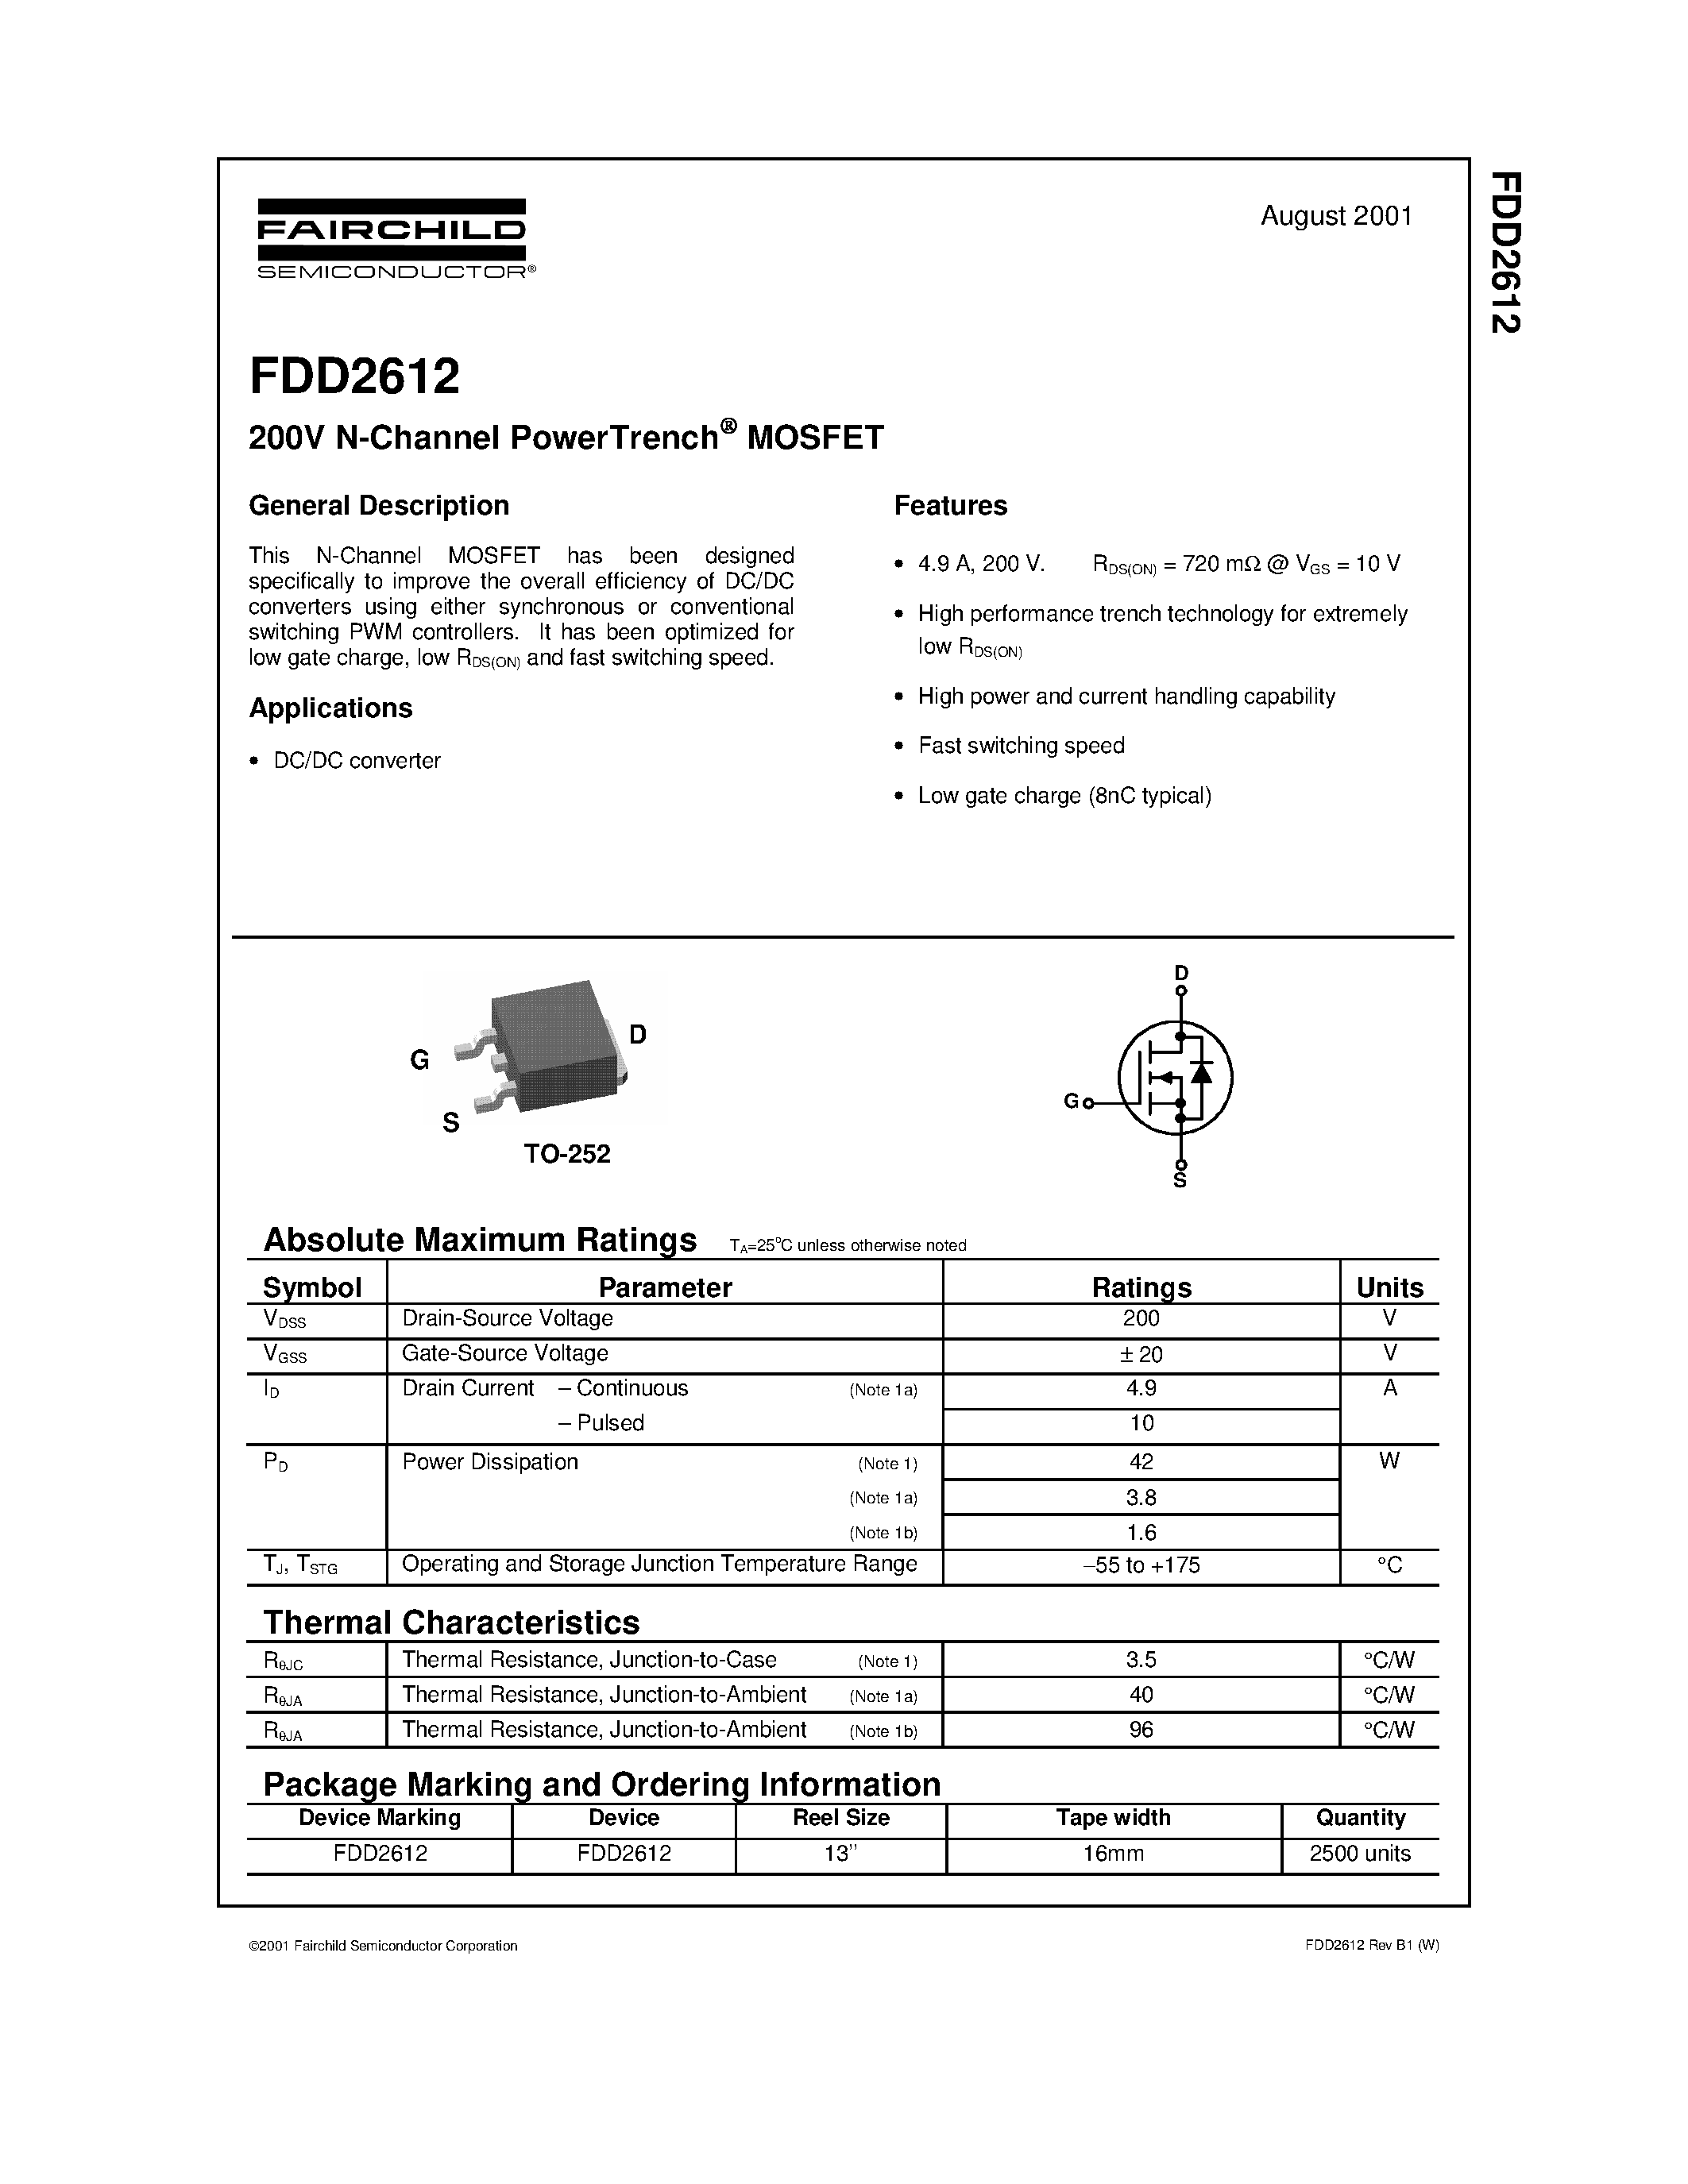 Даташит FDD2612 - 200V N-Channel PowerTrench MOSFET страница 1